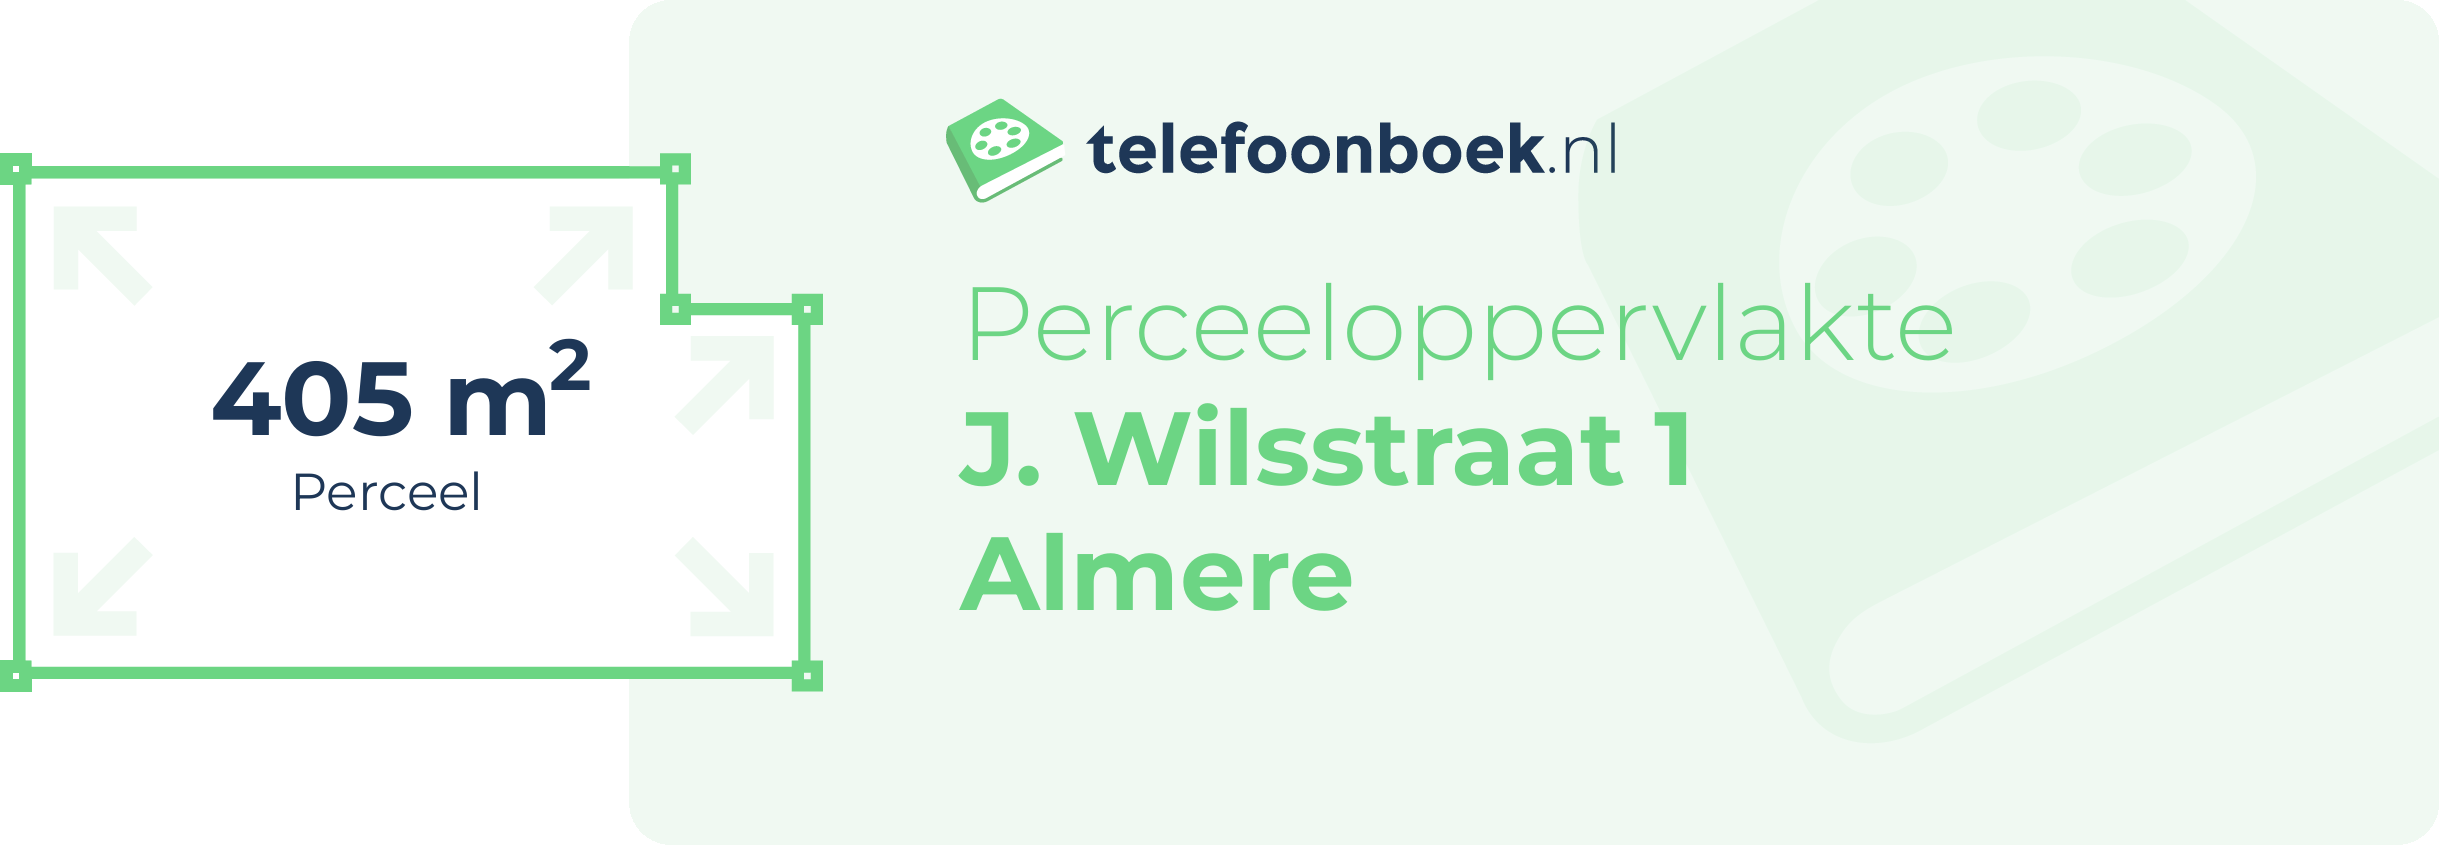 Perceeloppervlakte J. Wilsstraat 1 Almere